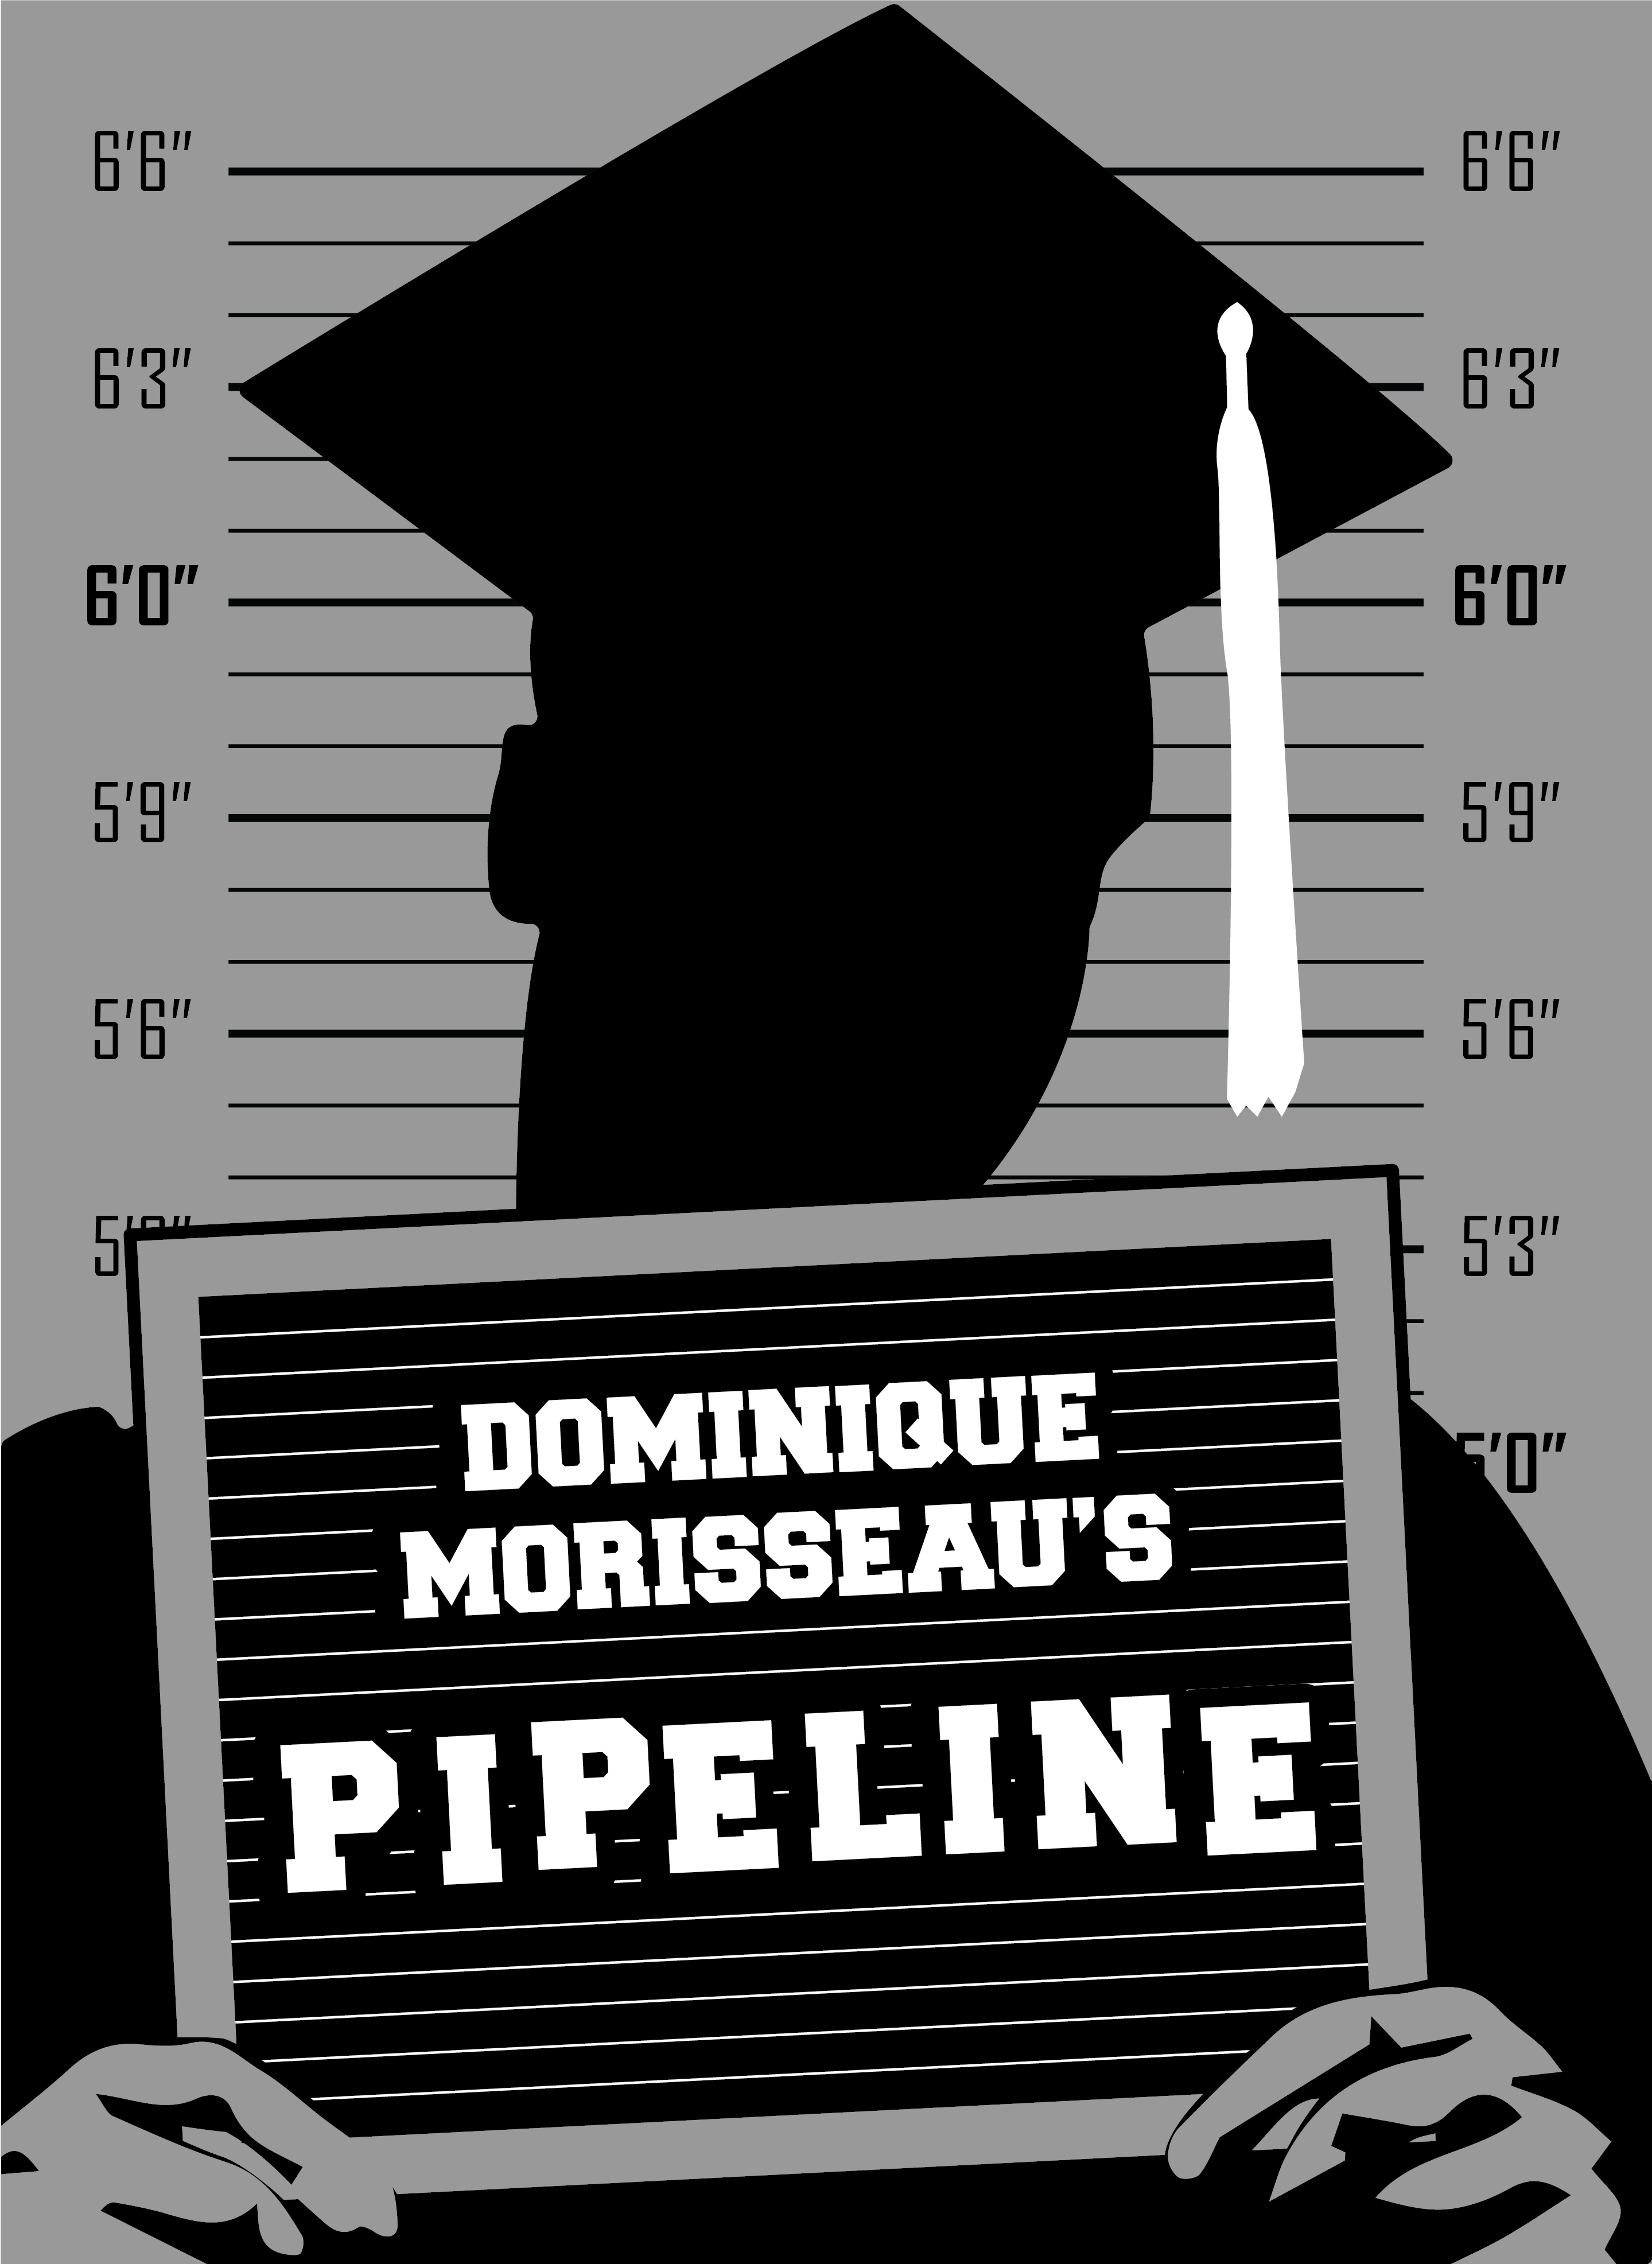 Play logo for Pipeline